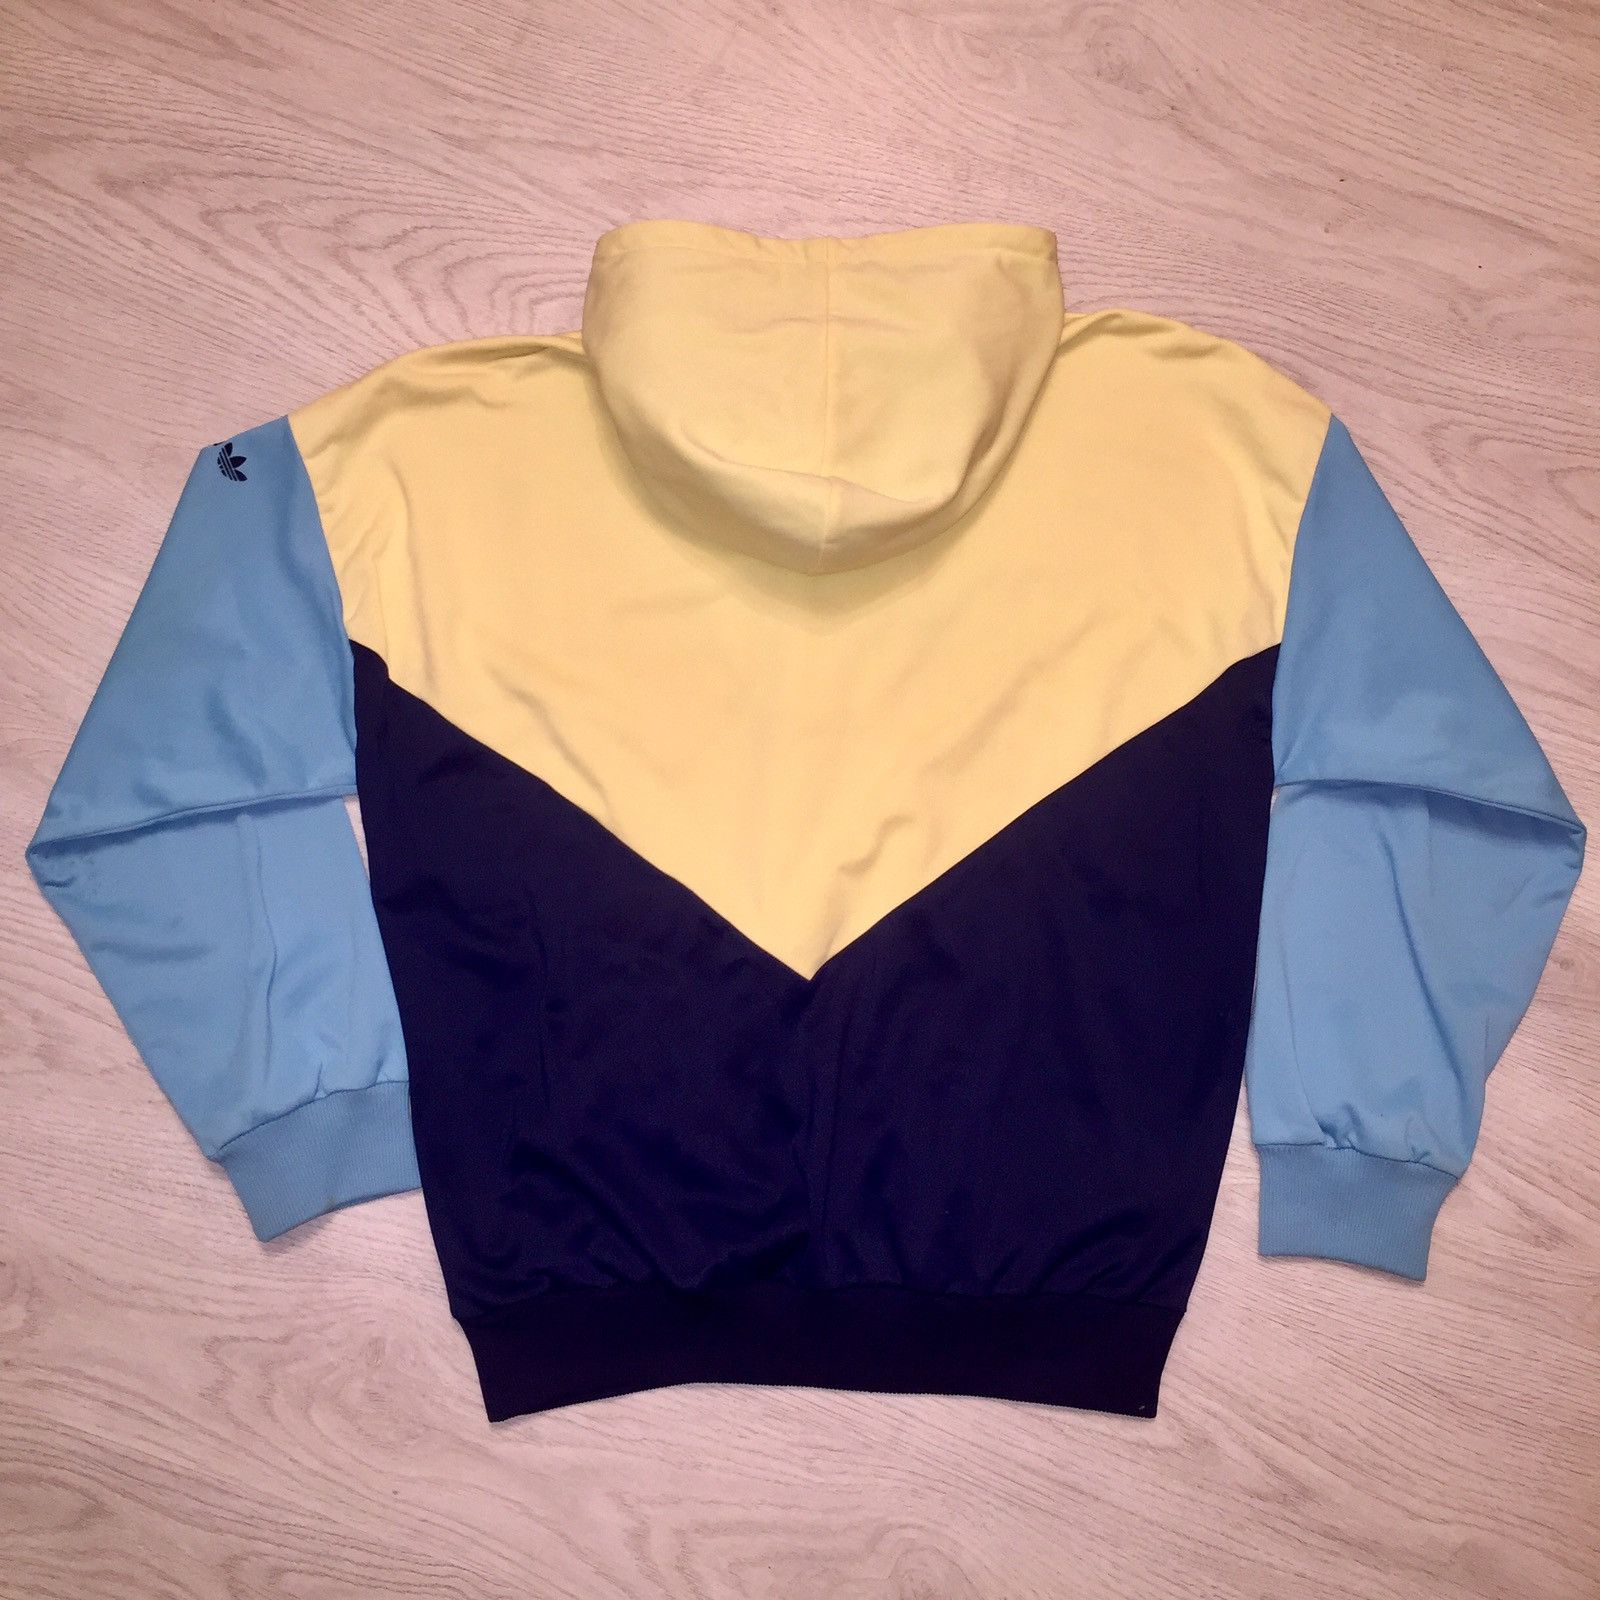 Adidas Vintage ADIDAS Colorado 1970’s 1989’s size M Hoodies Anorak Sweatshirts Zip YKK made in West Germany Yellow Blue Dark Blue Rare Hype Black Size US M / EU 48-50 / 2 - 8 Preview